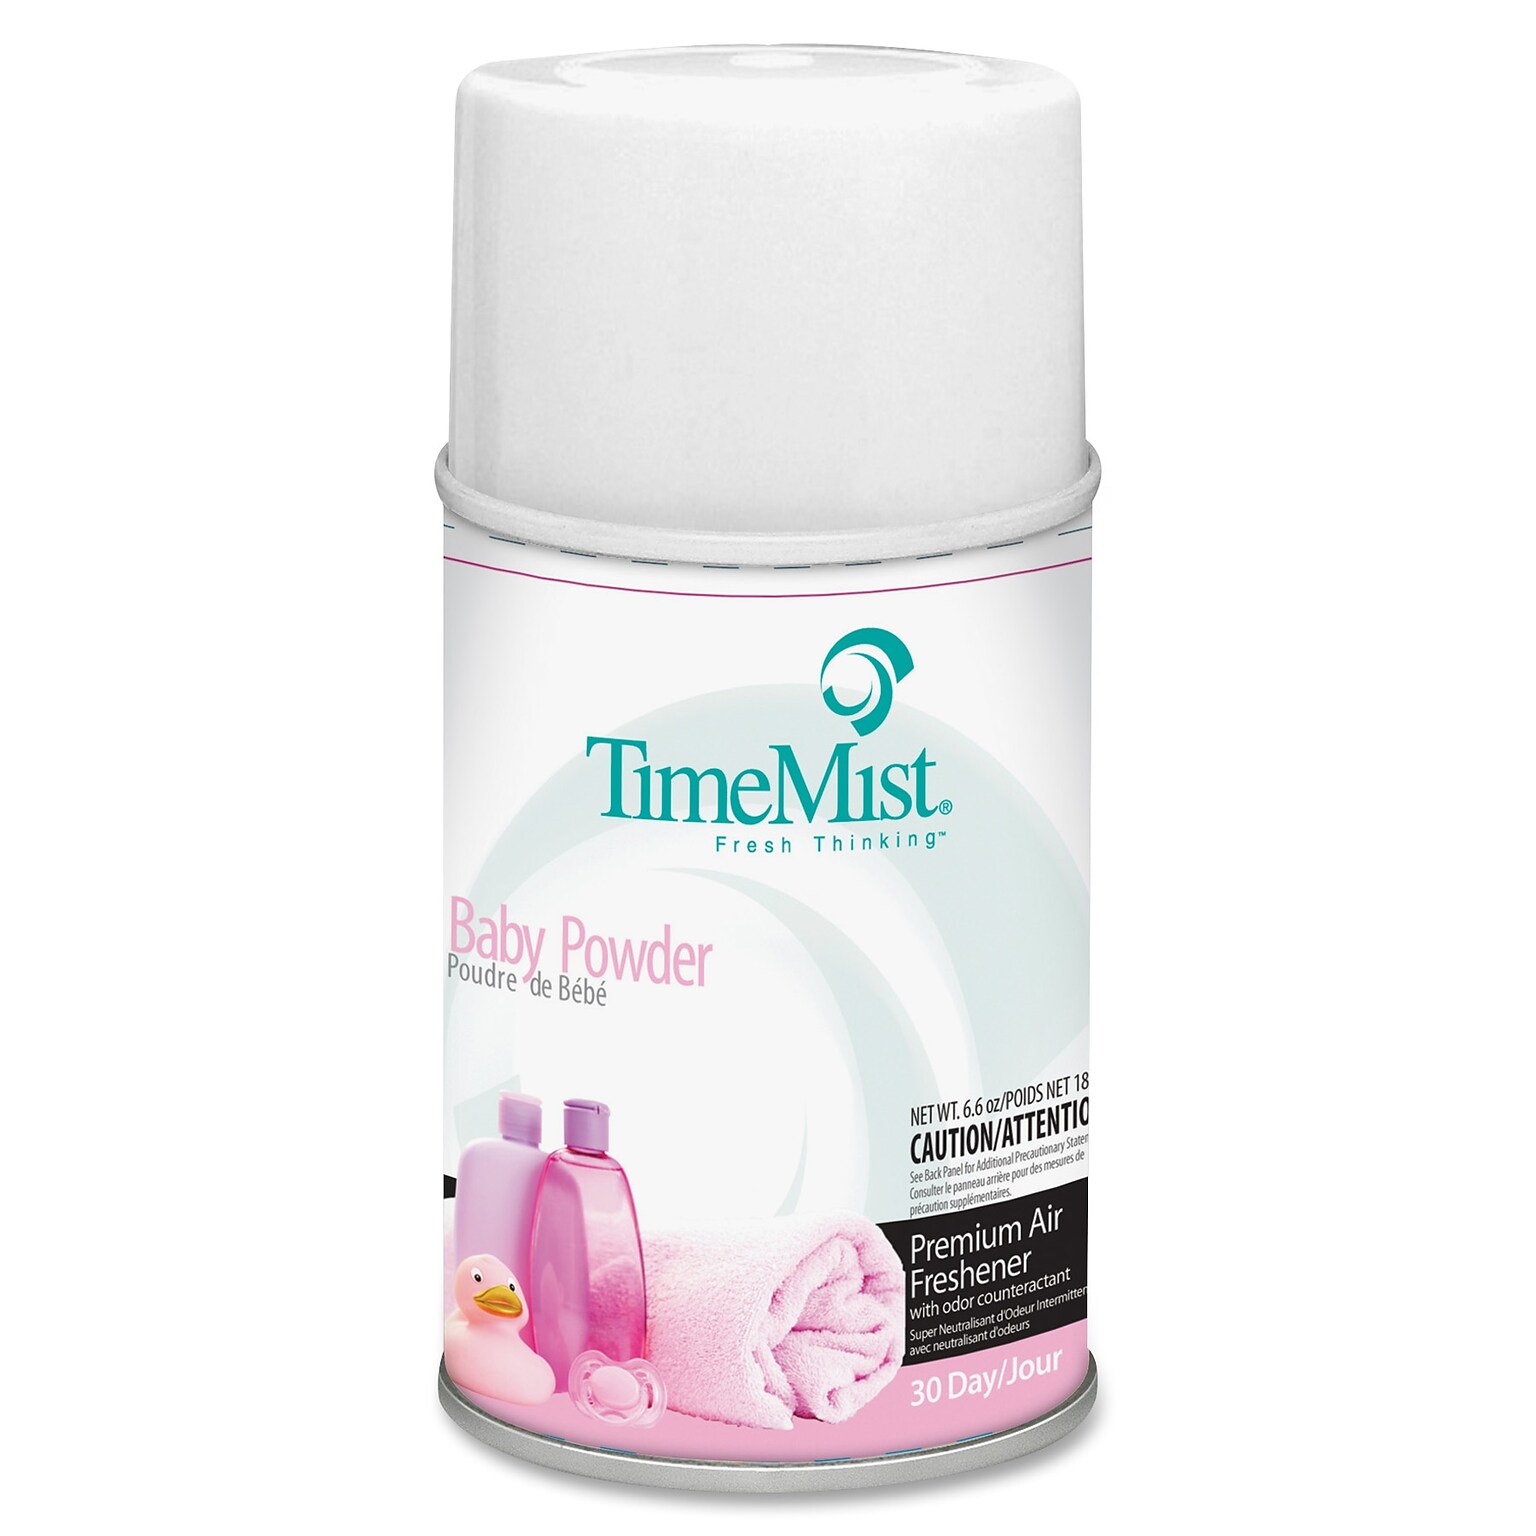 TimeMist Air Freshener & Deodorizer Aerosol Dispenser Refill, Baby Powder Scent, 5.3 fl oz (TMS332512TMCAPT)